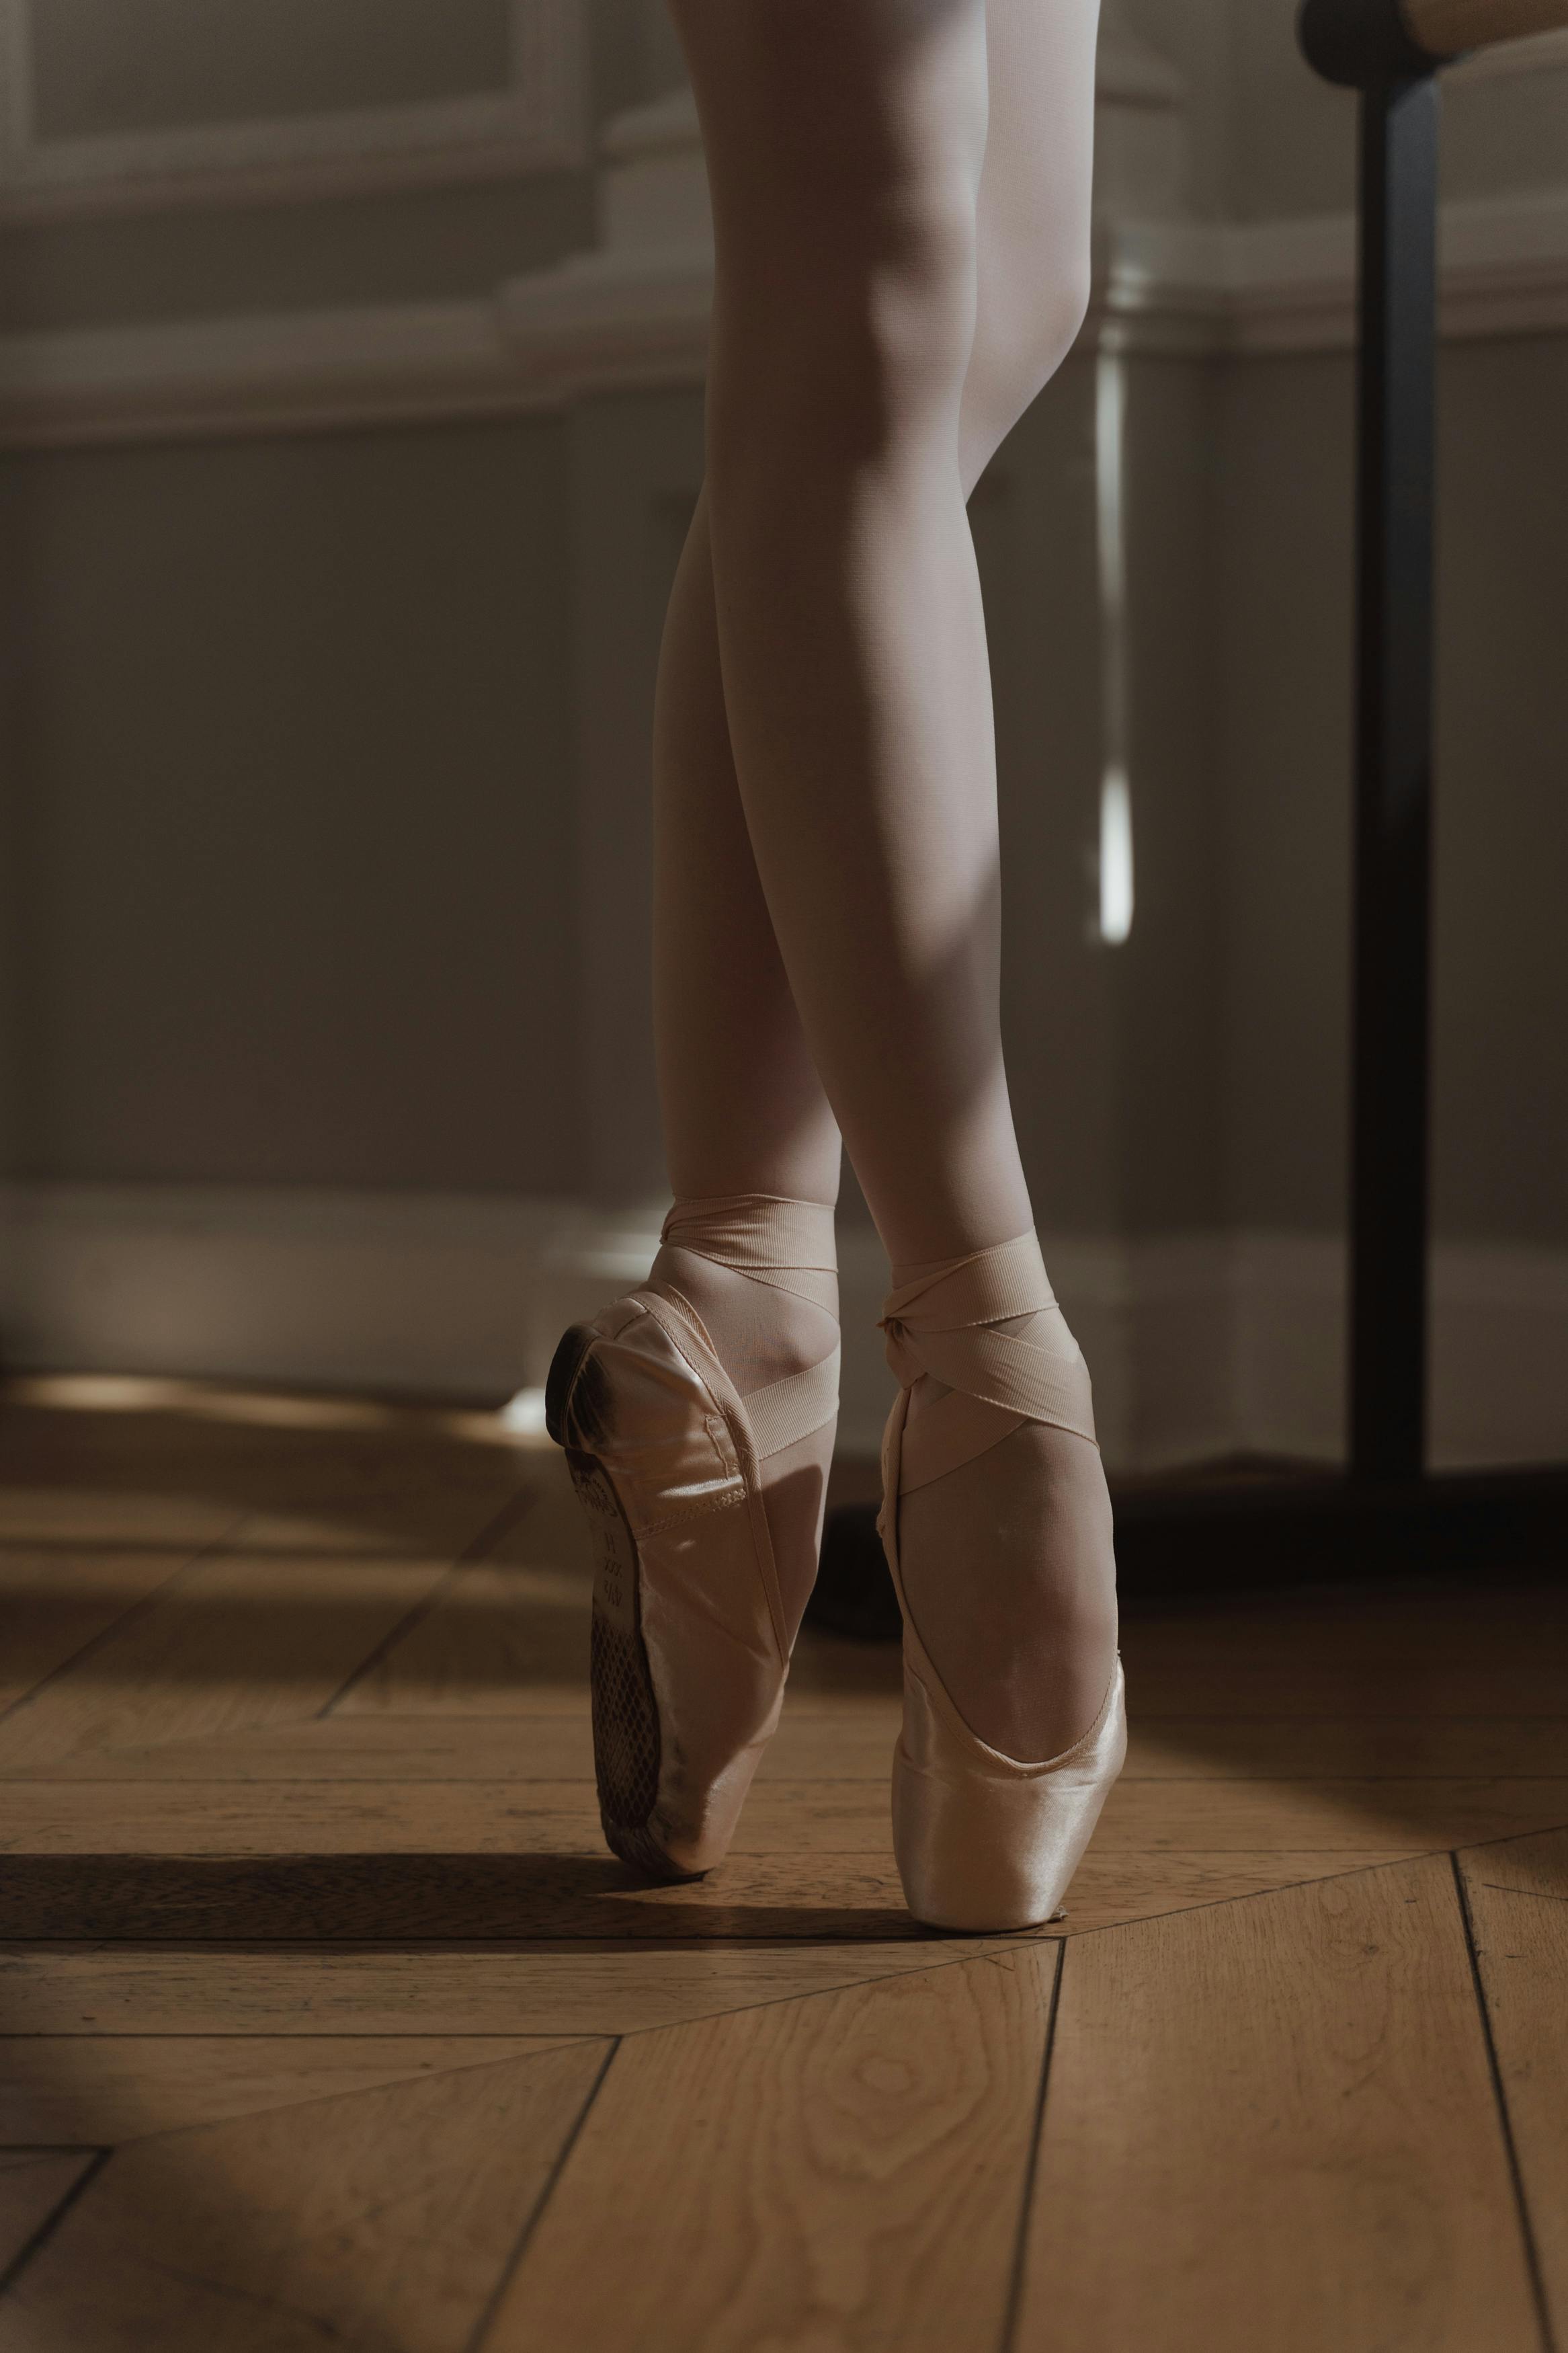 Closeup of Ballet Shoes Dancing in Pointe Stock Photo - Image of calendar,  ballerina: 43081838